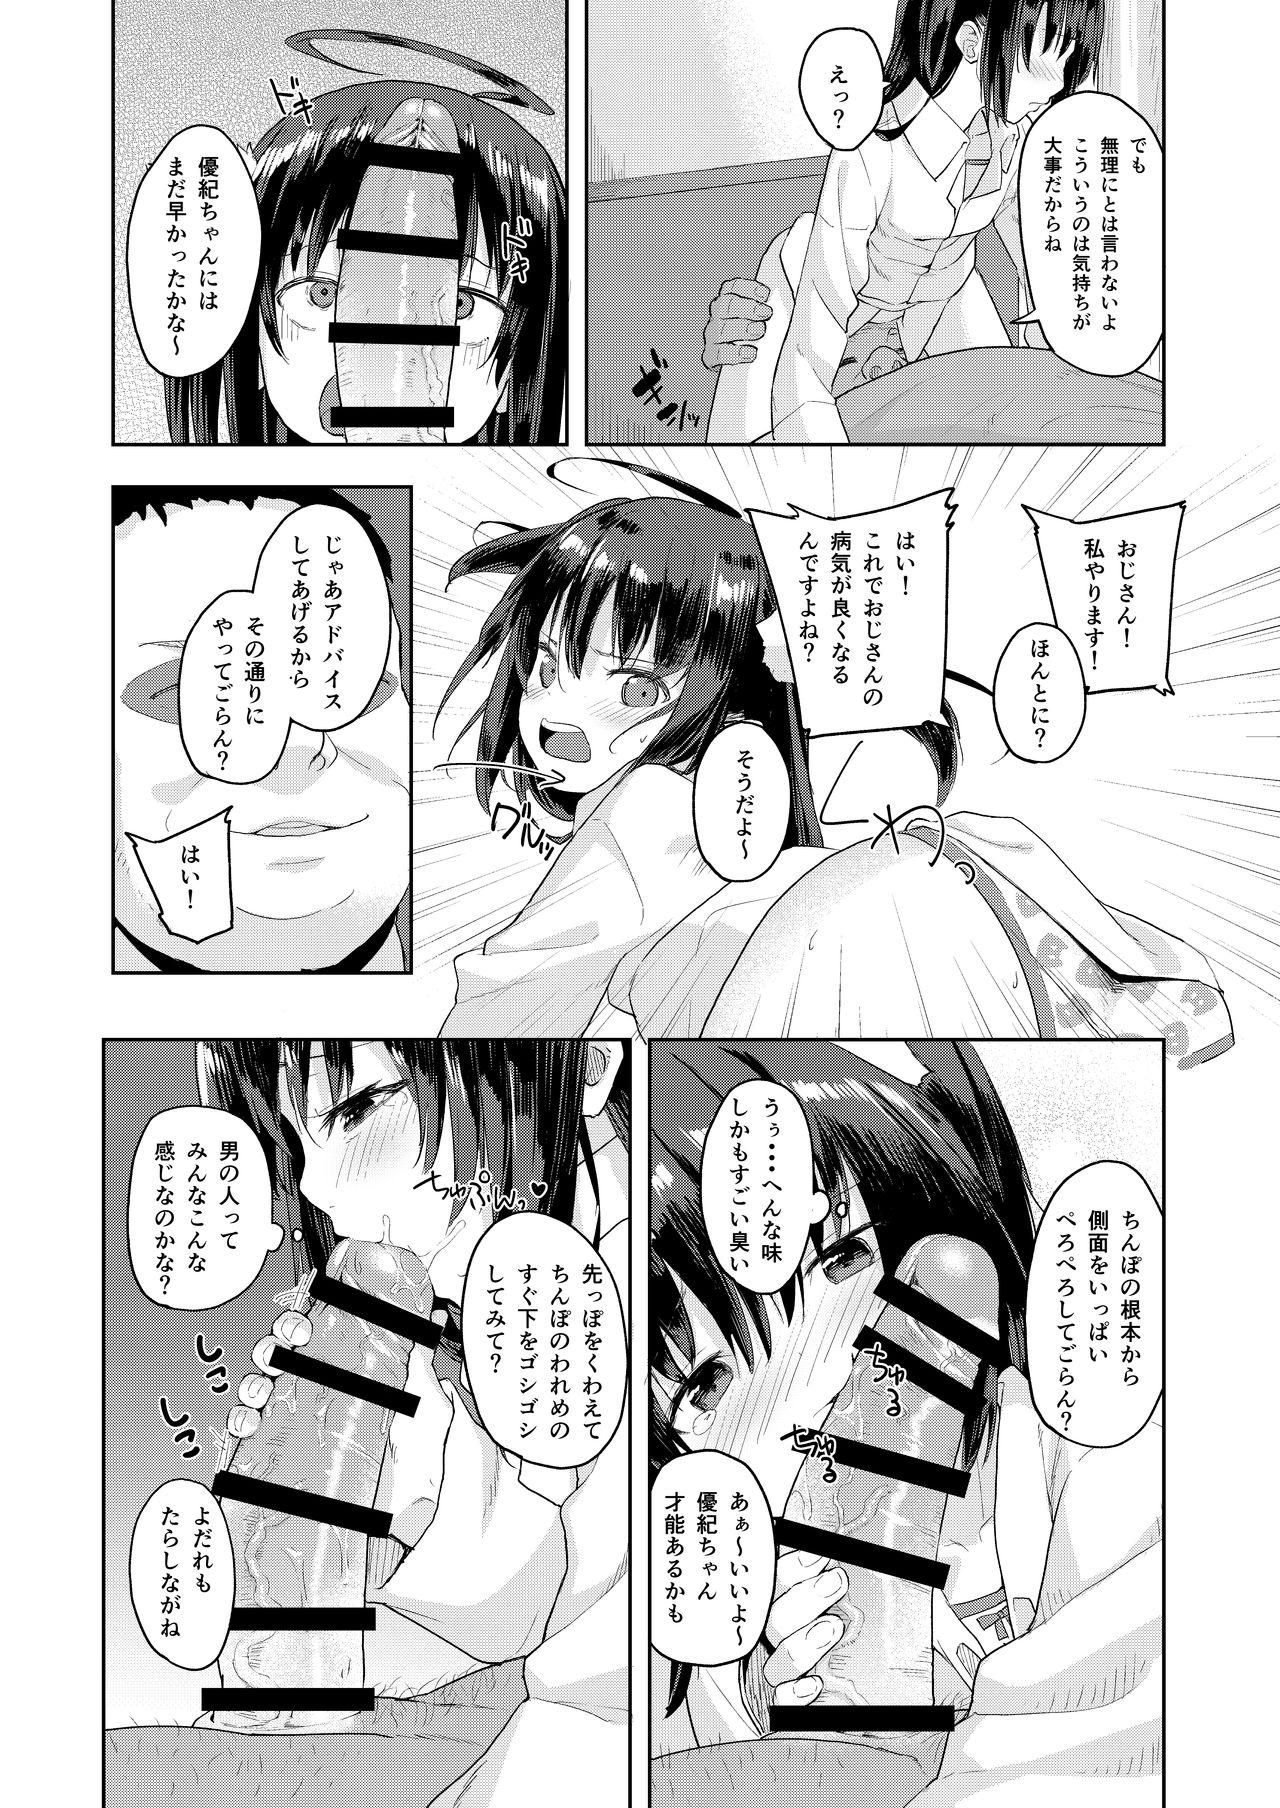 American Ojisan no joji asobi - Original Maid - Page 10